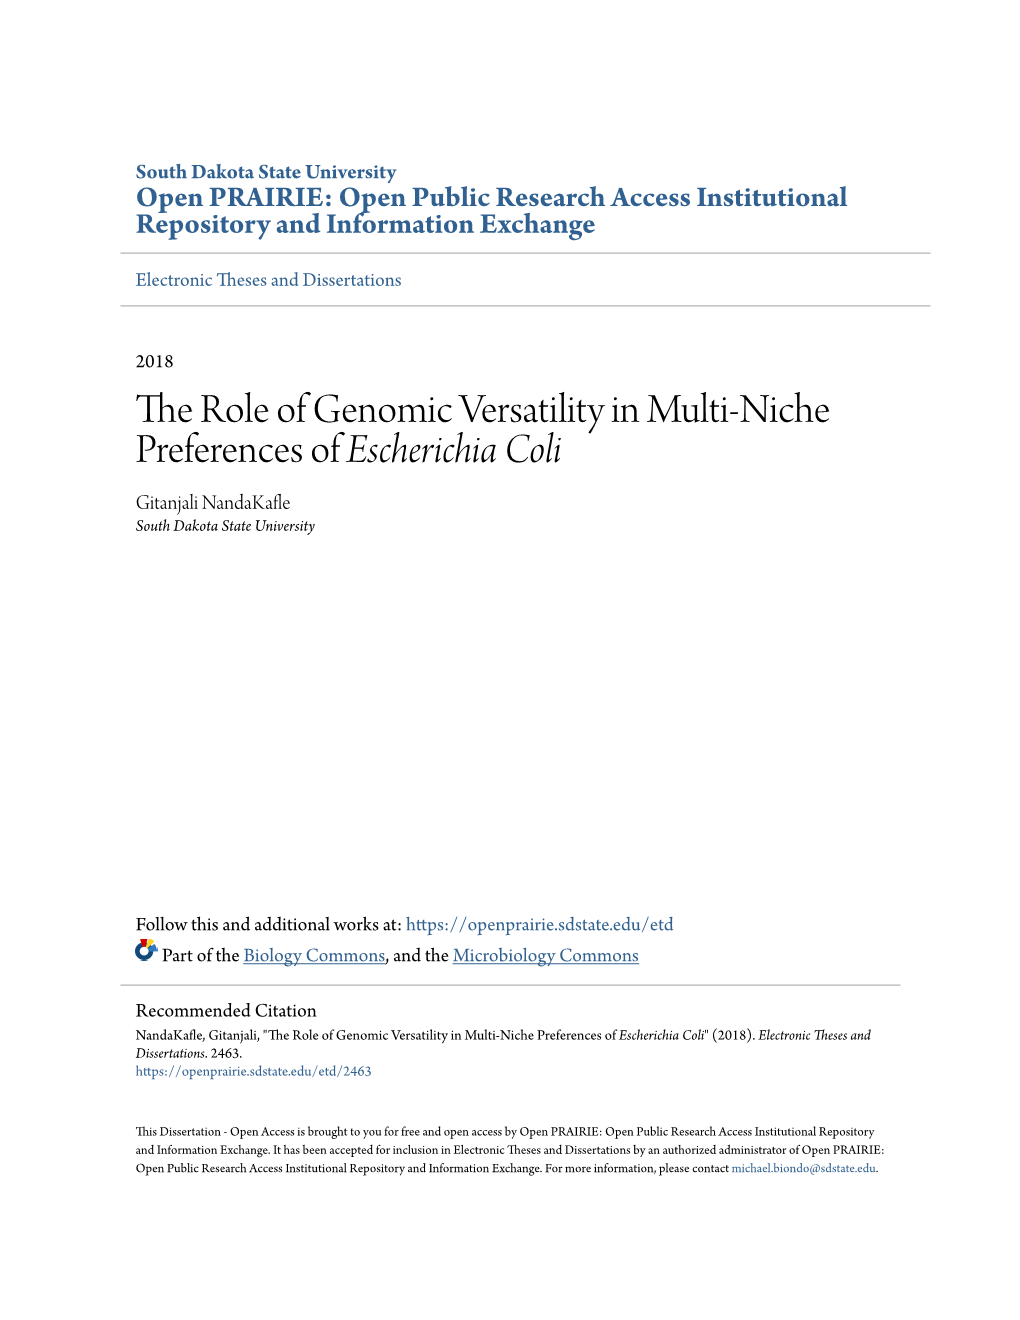 The Role of Genomic Versatility in Multi-Niche Preferences of Escherichia Coli Gitanjali Nandakafle South Dakota State University